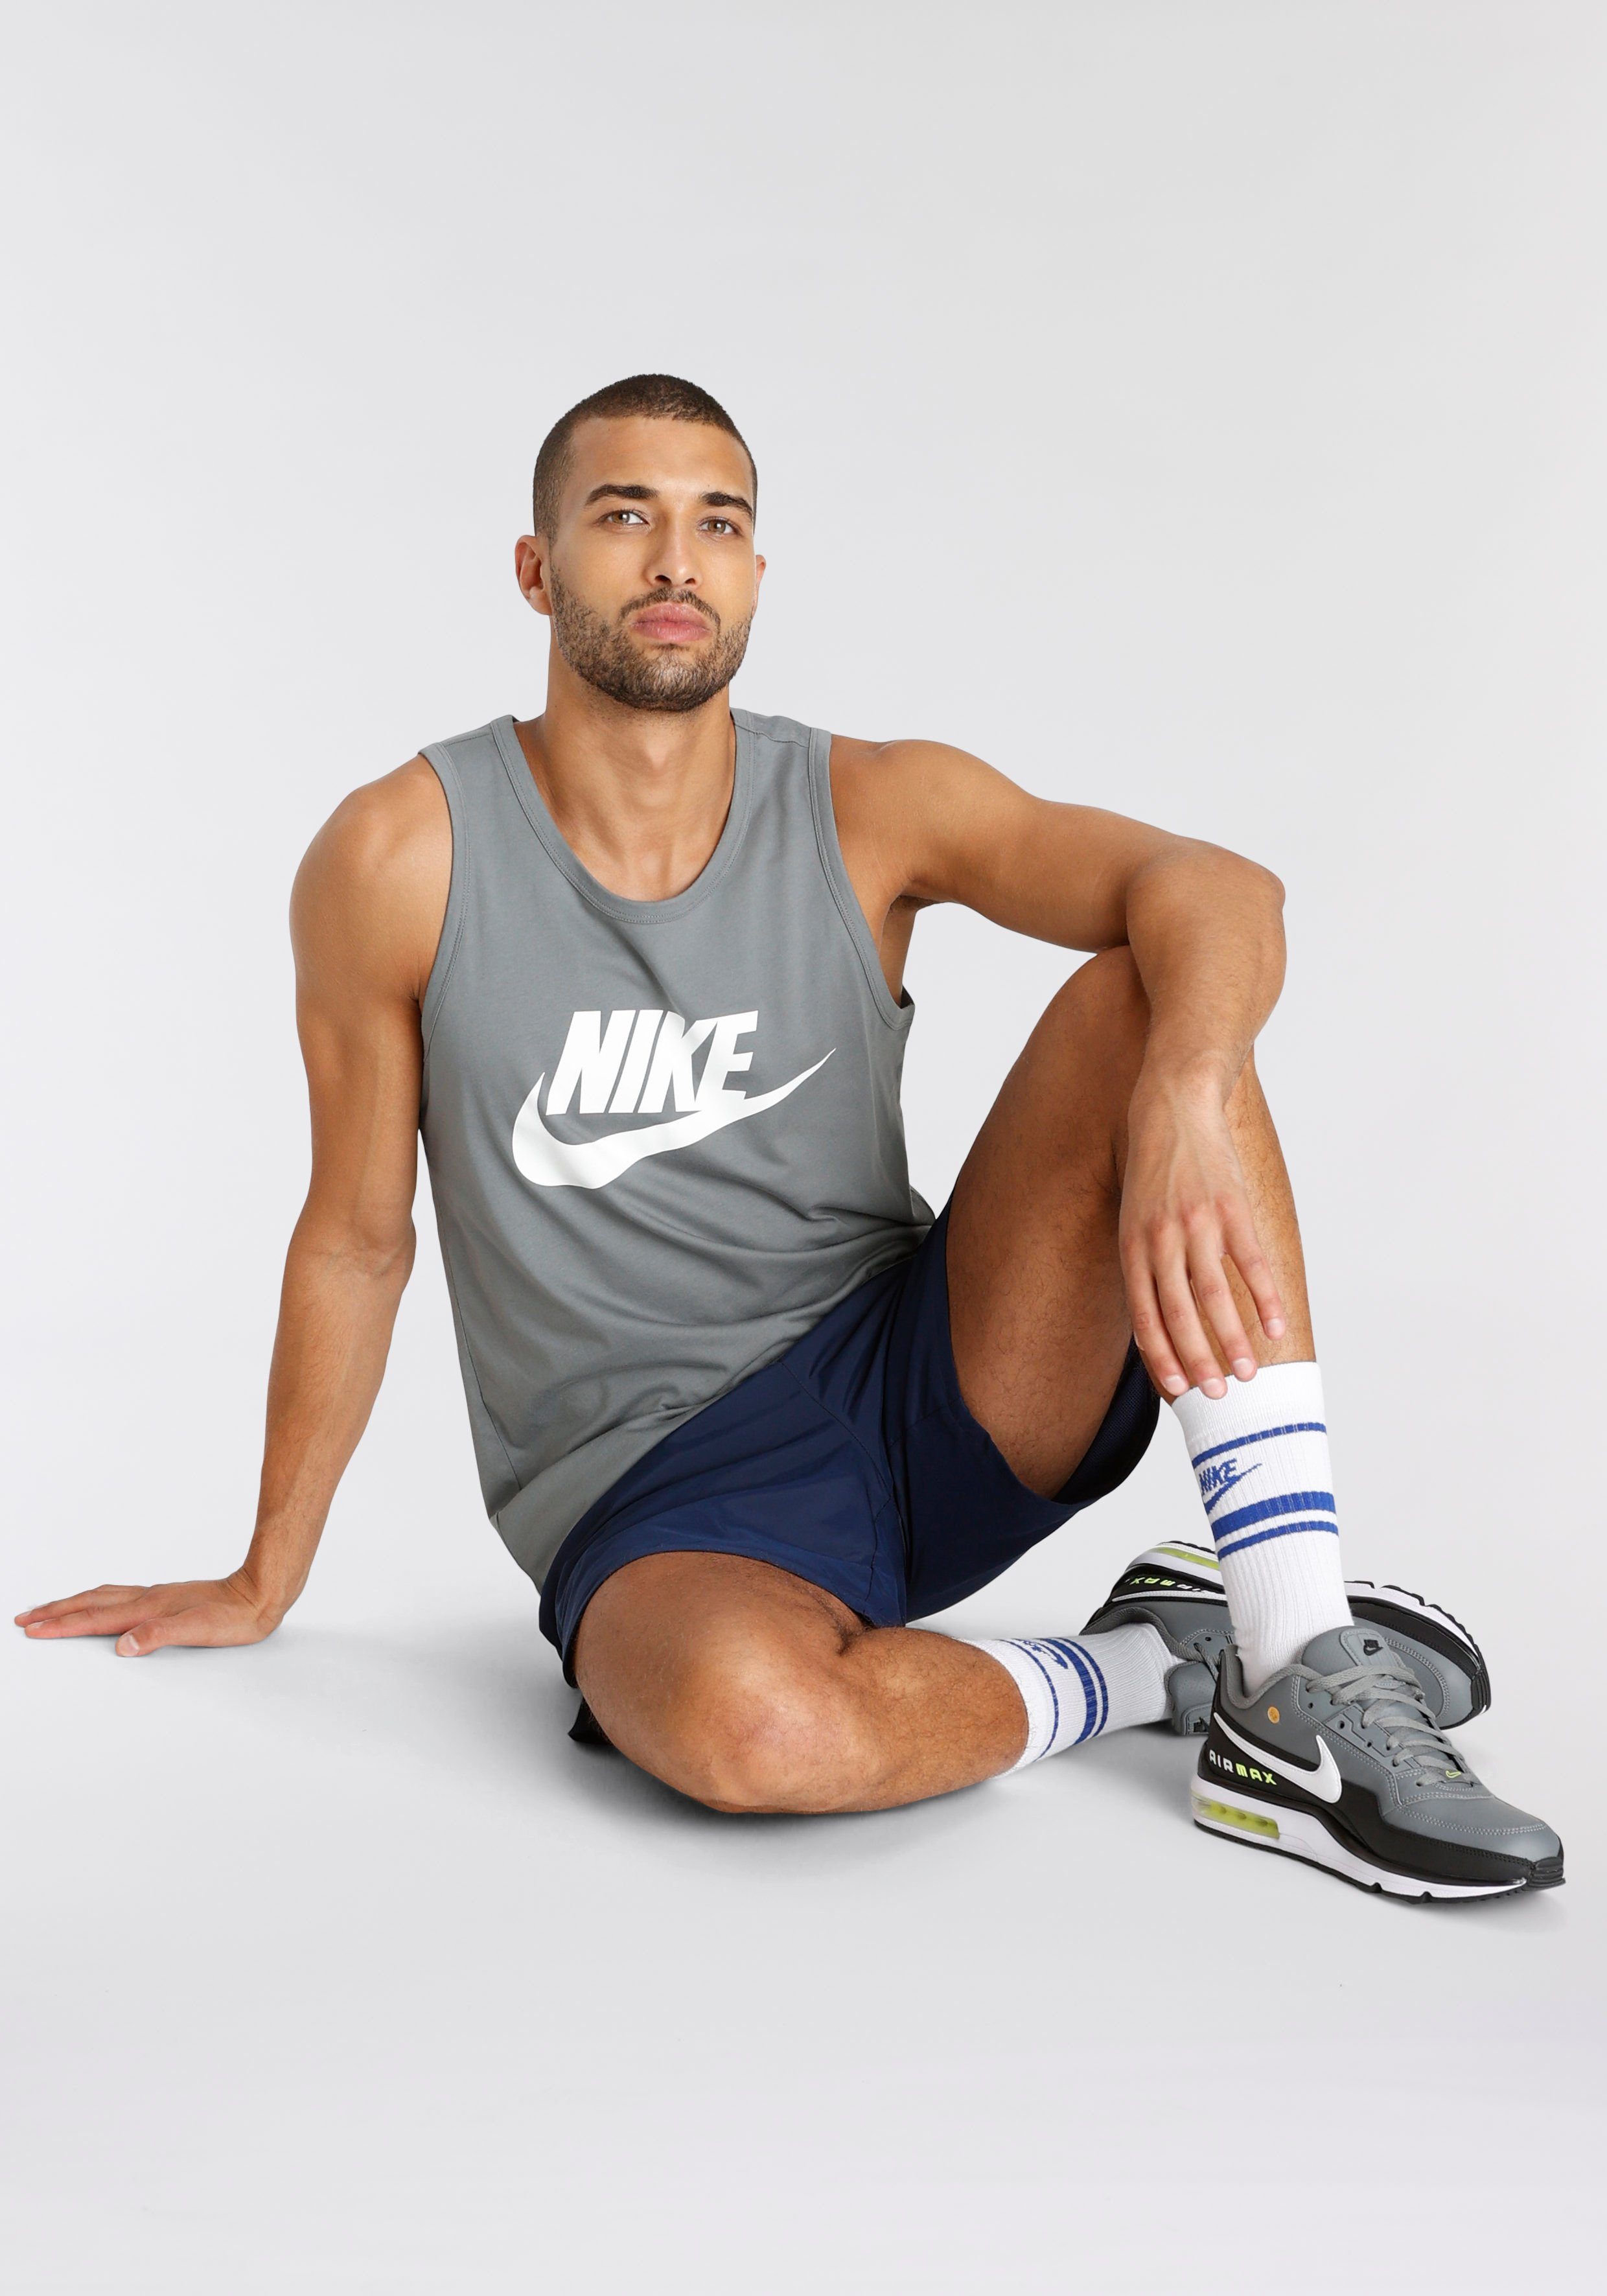 Sportswear Nike MIDNIGHT Sport Flow Woven NAVY/WHITE Shorts Essentials Lined Men's Shorts